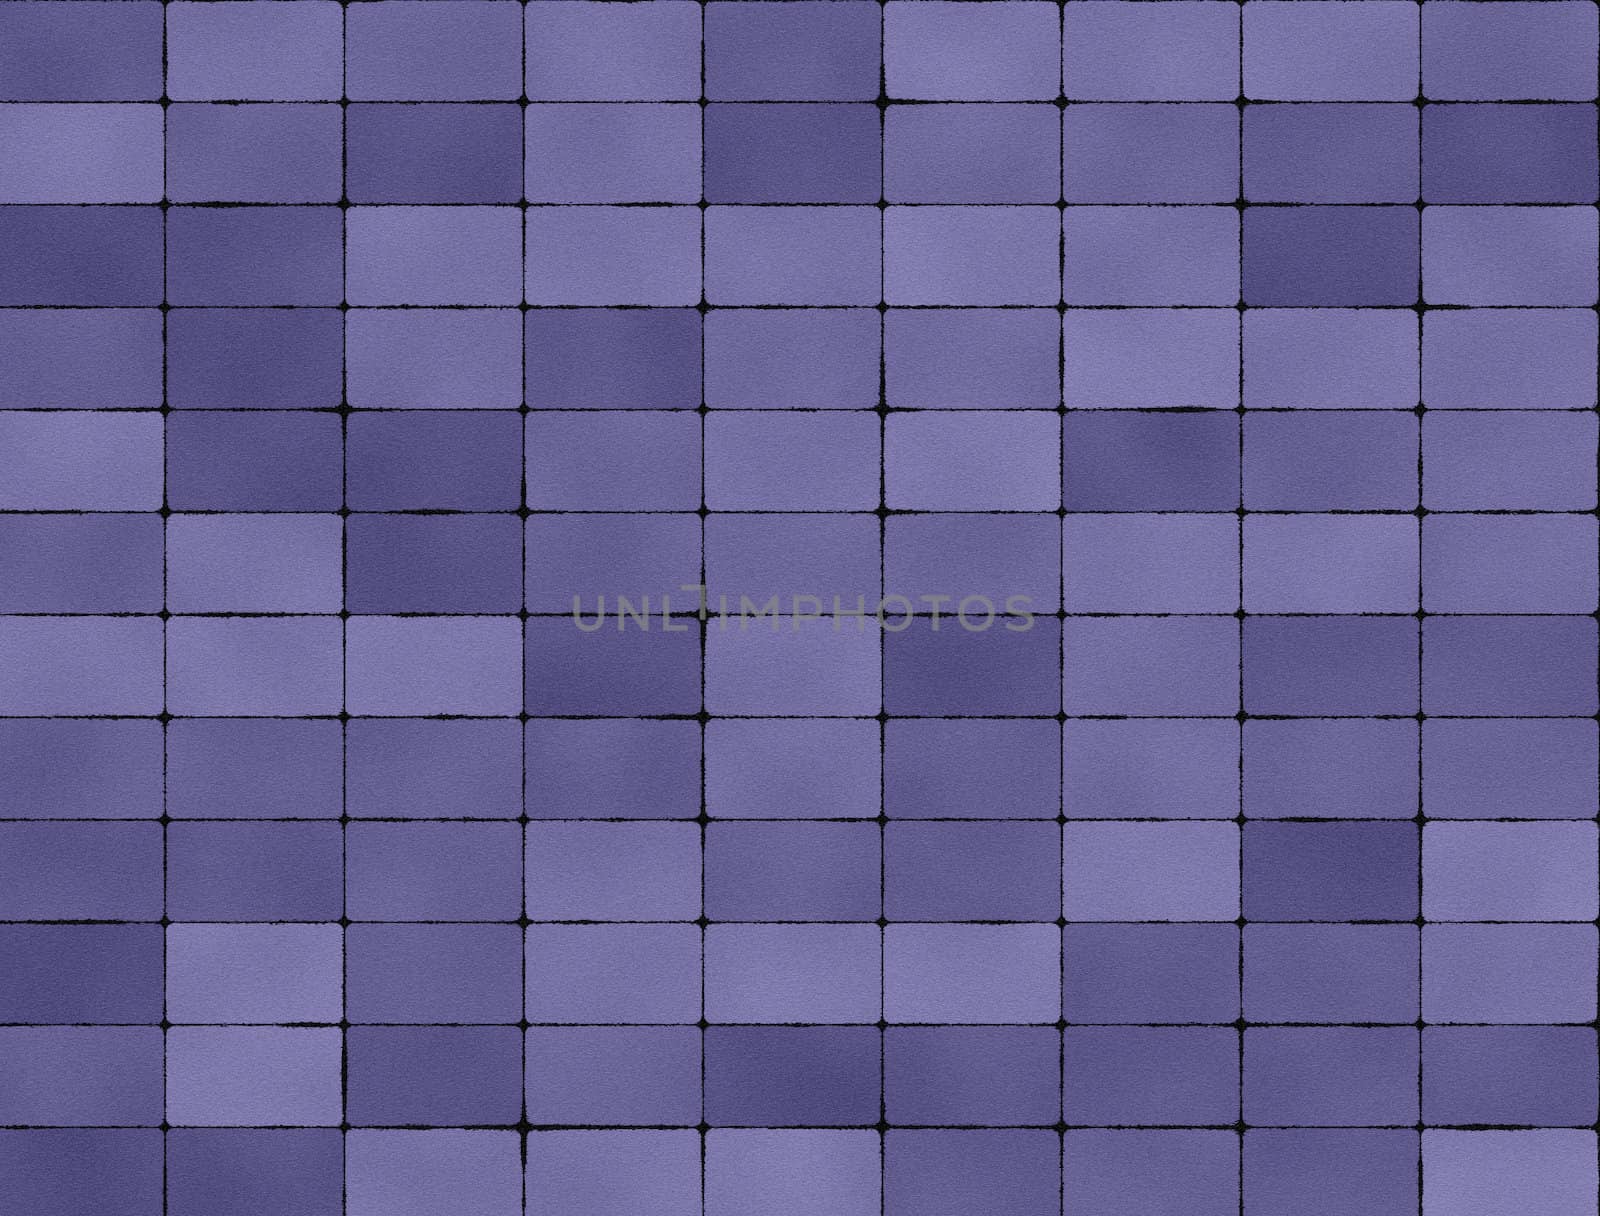 Seamless texture of purple tiles